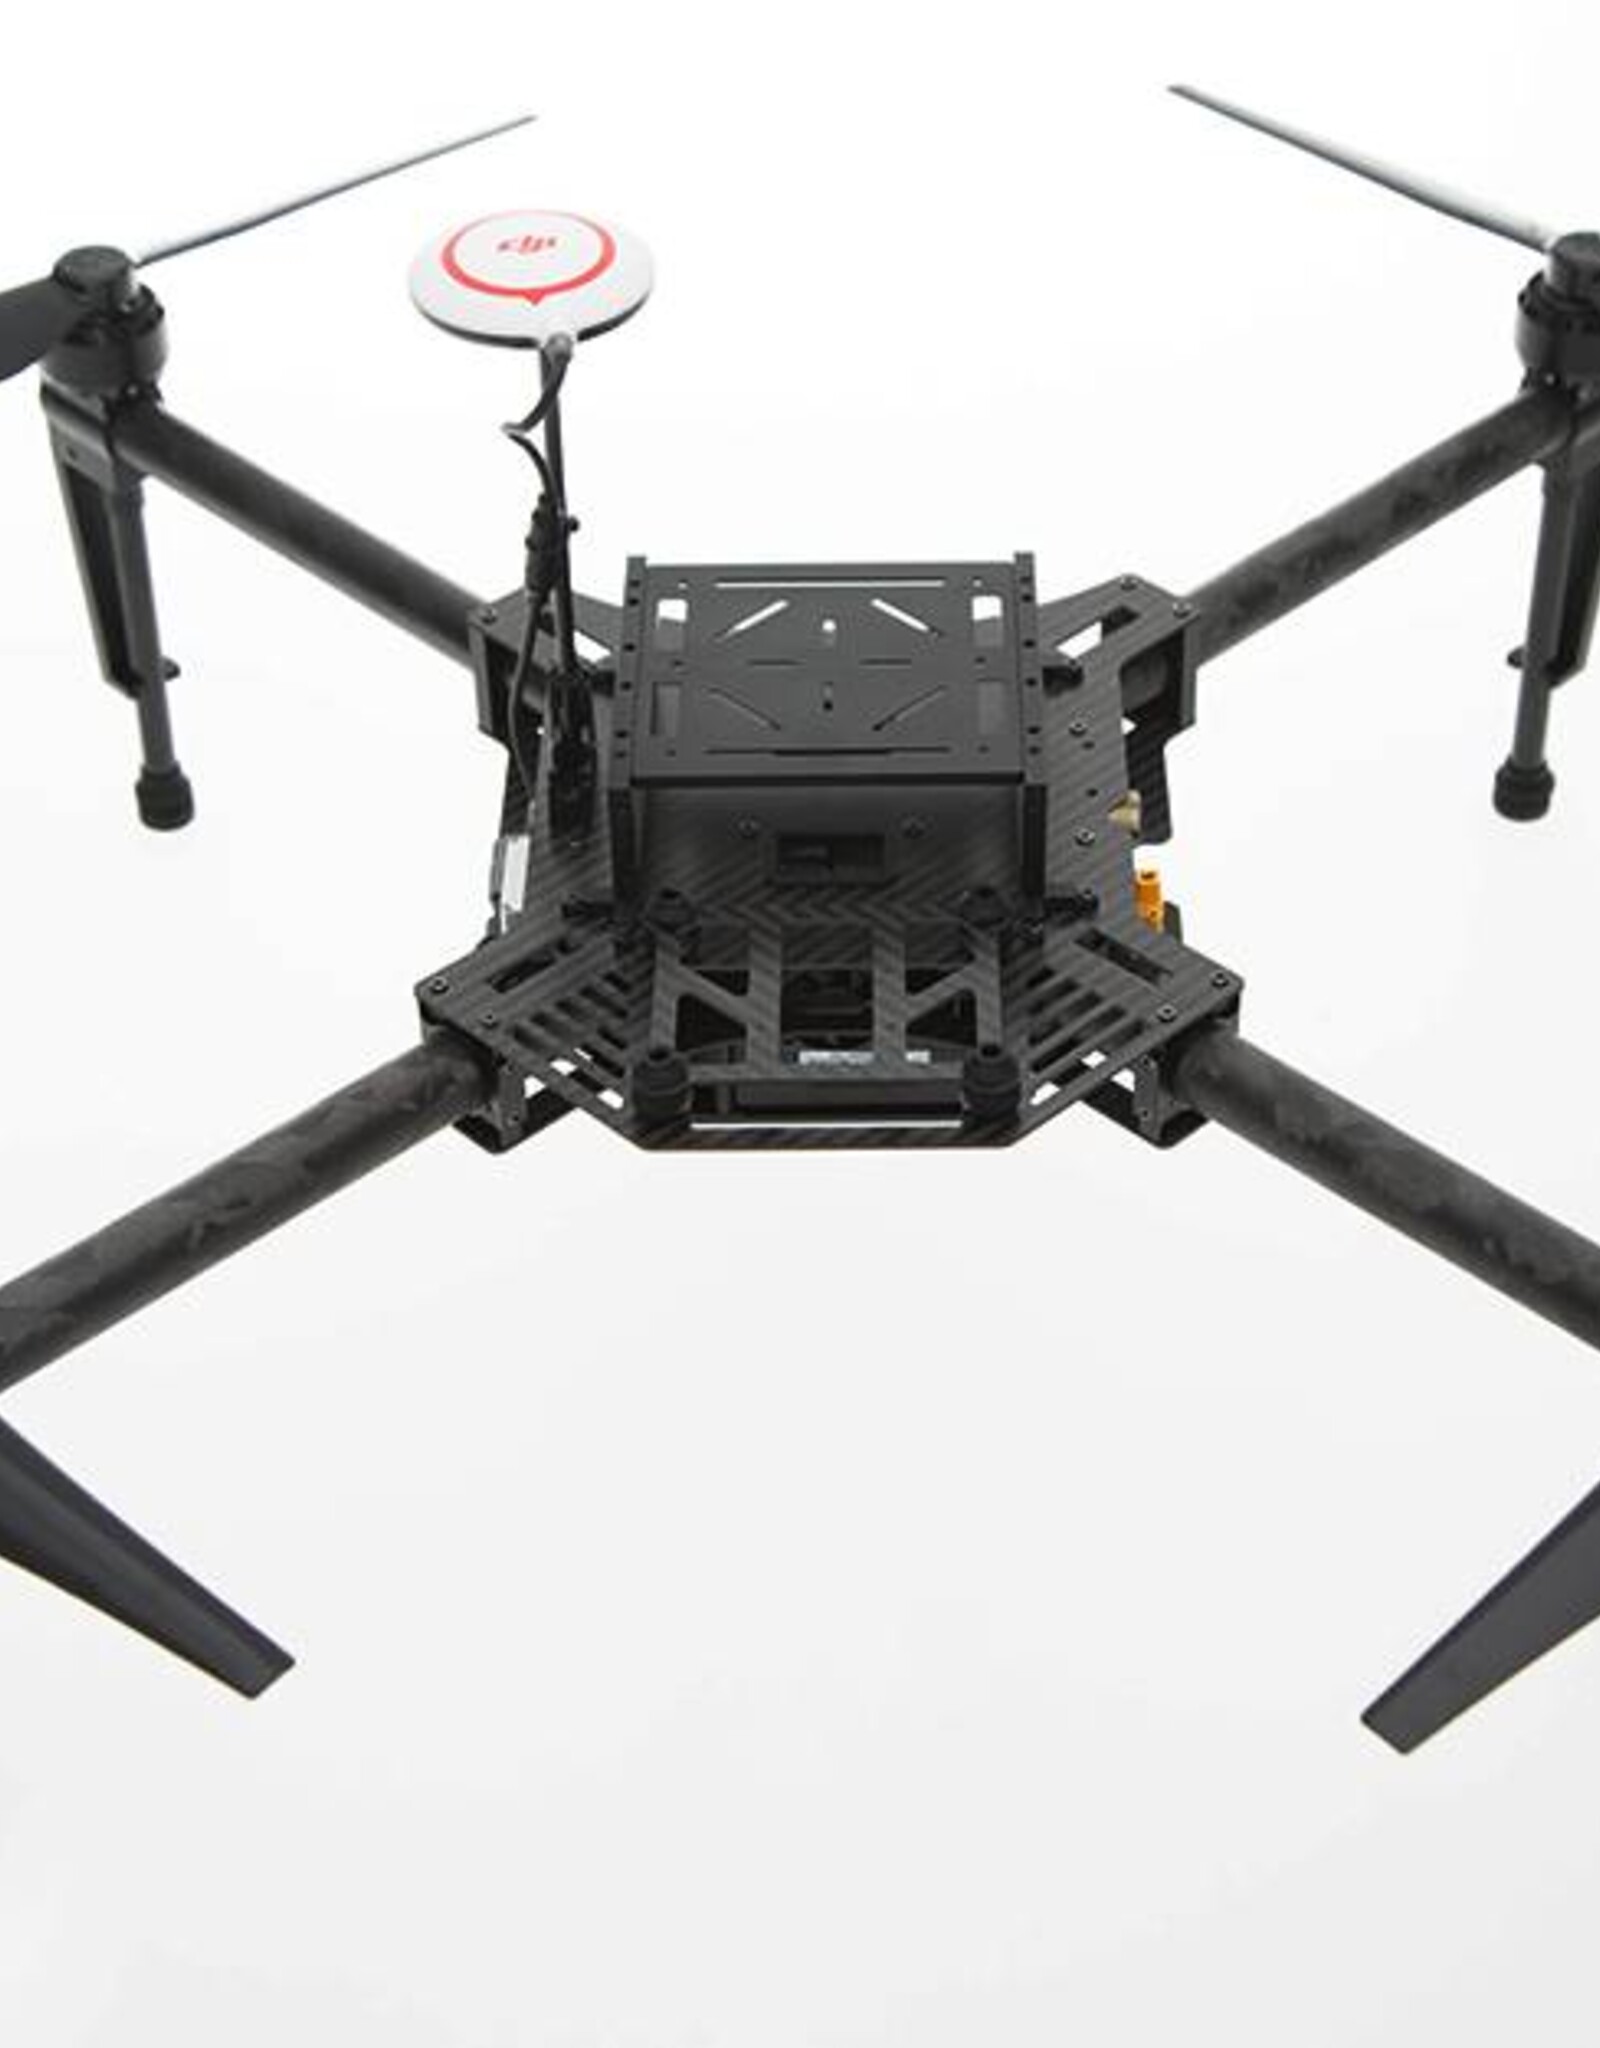 DJI DJI Matrice 100 quadcopter for developers droneland